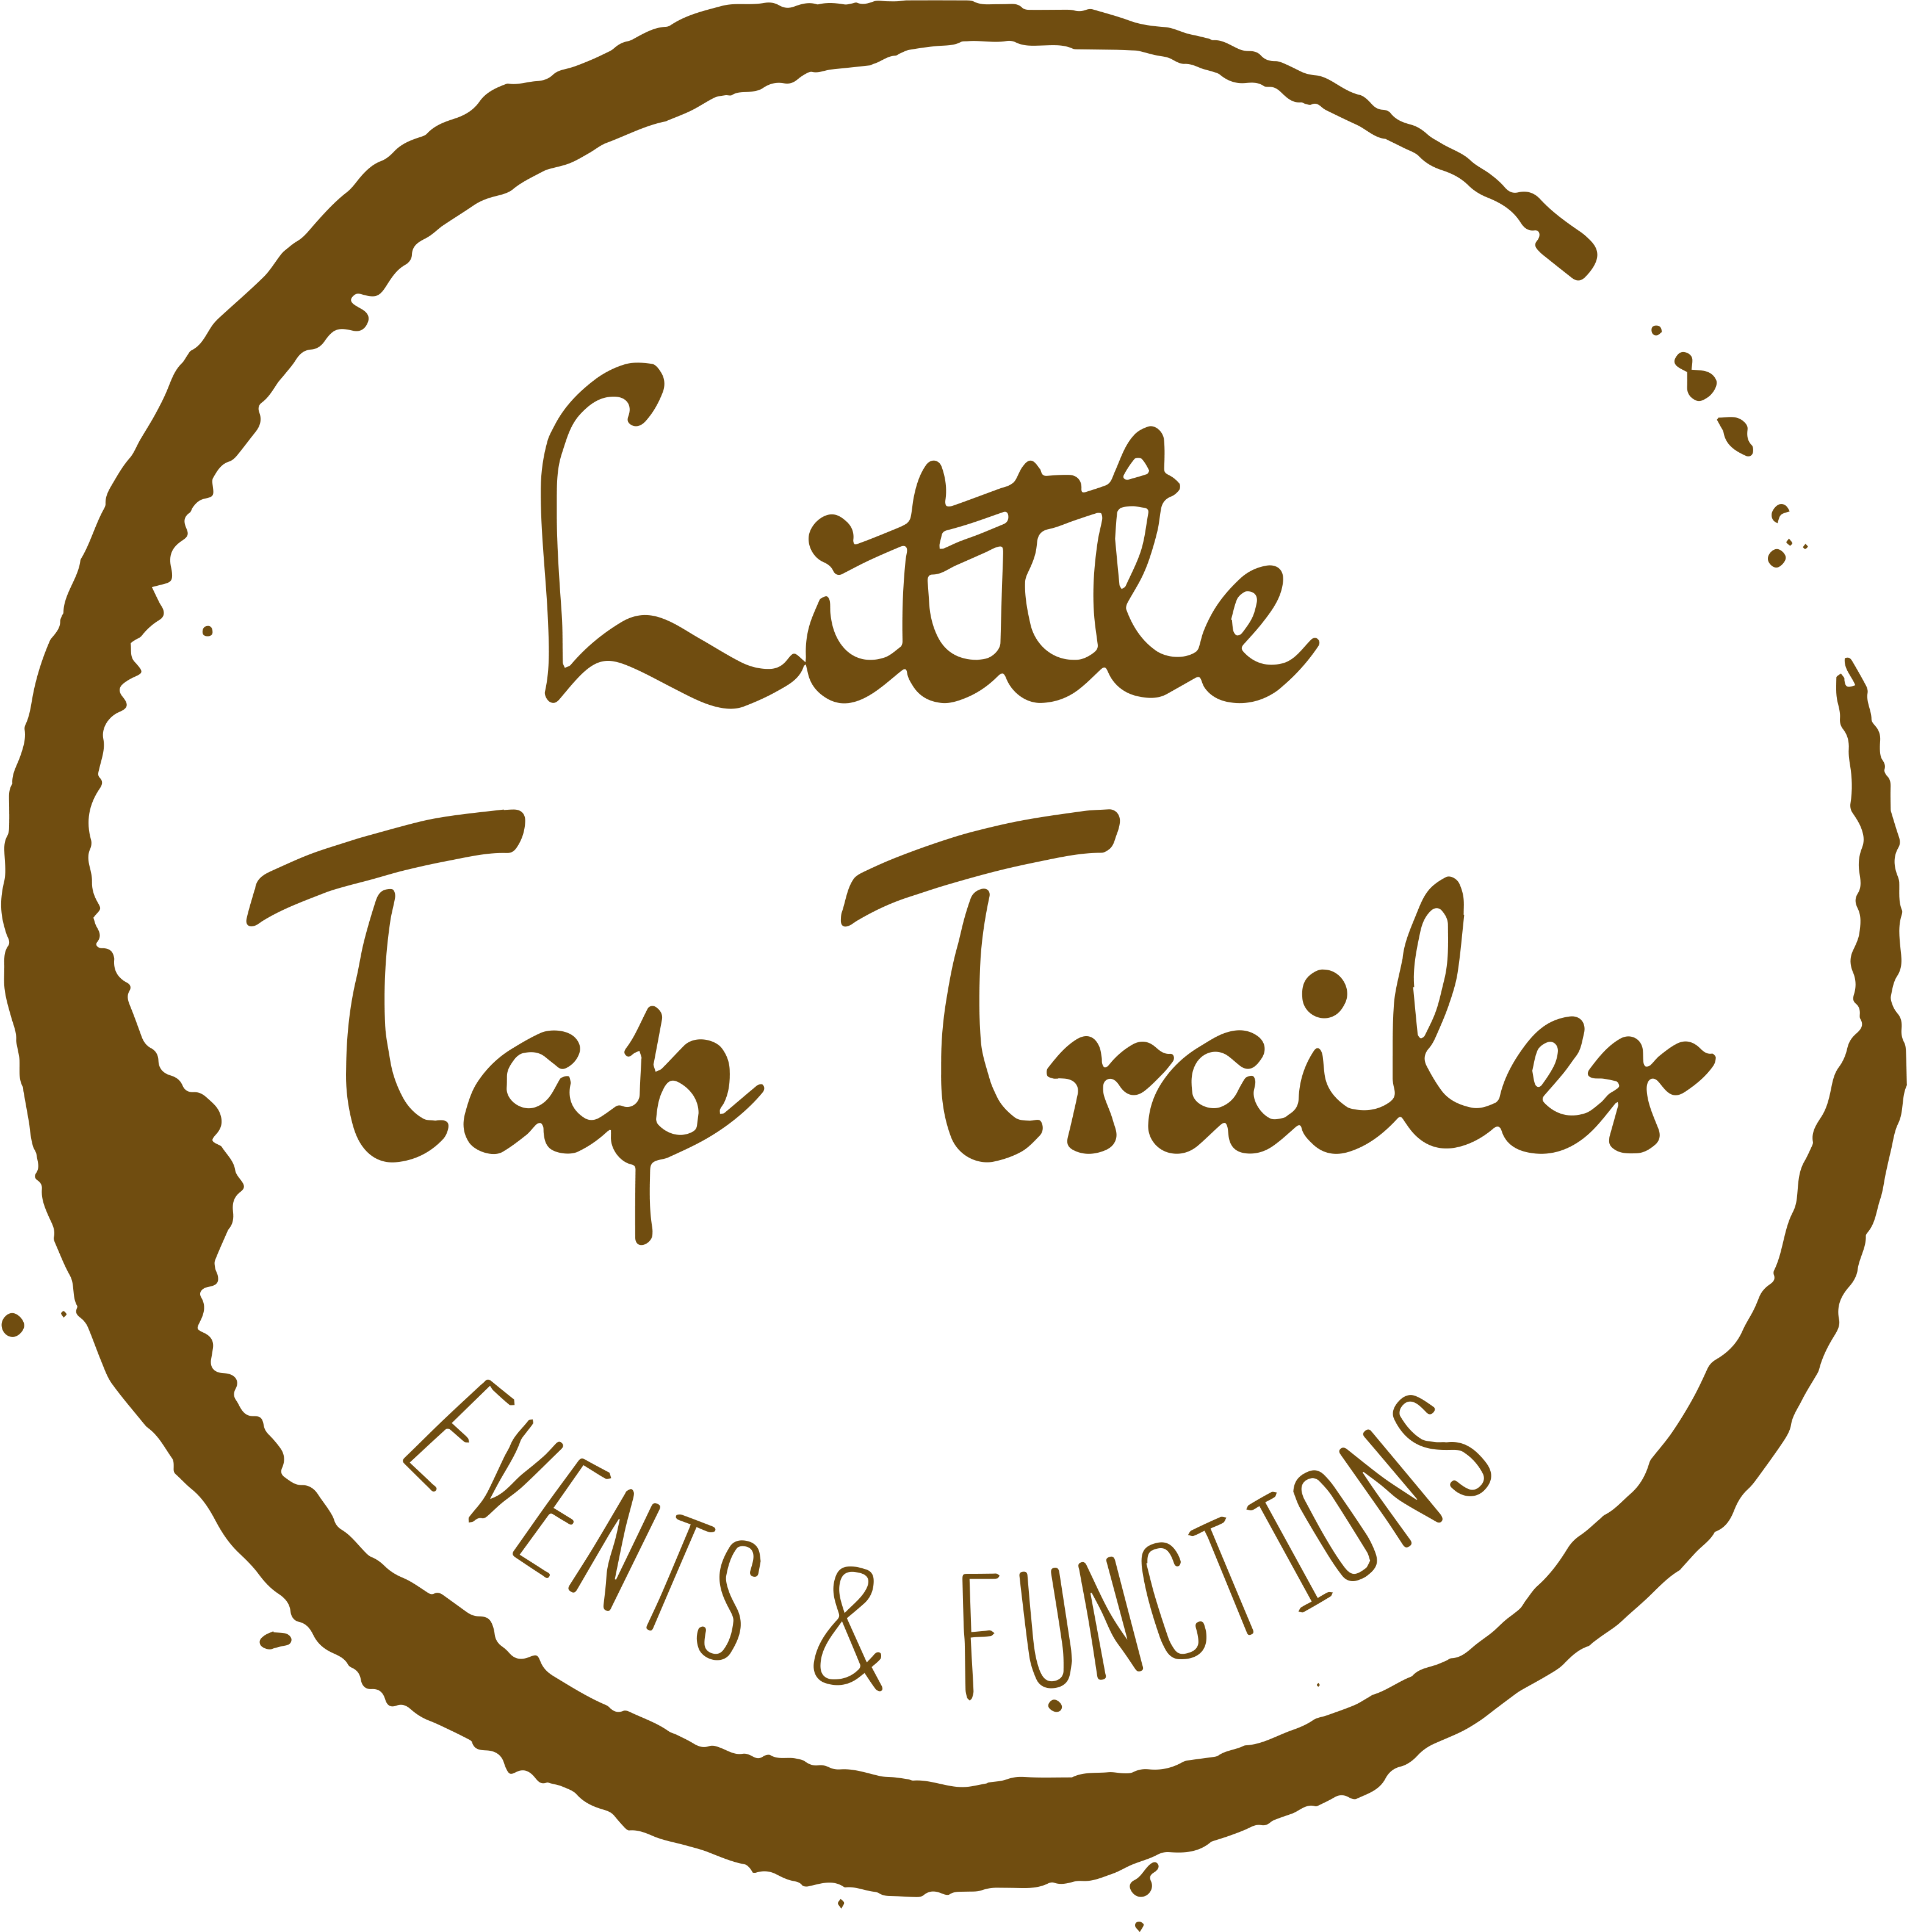 Little Tap Trailer logo